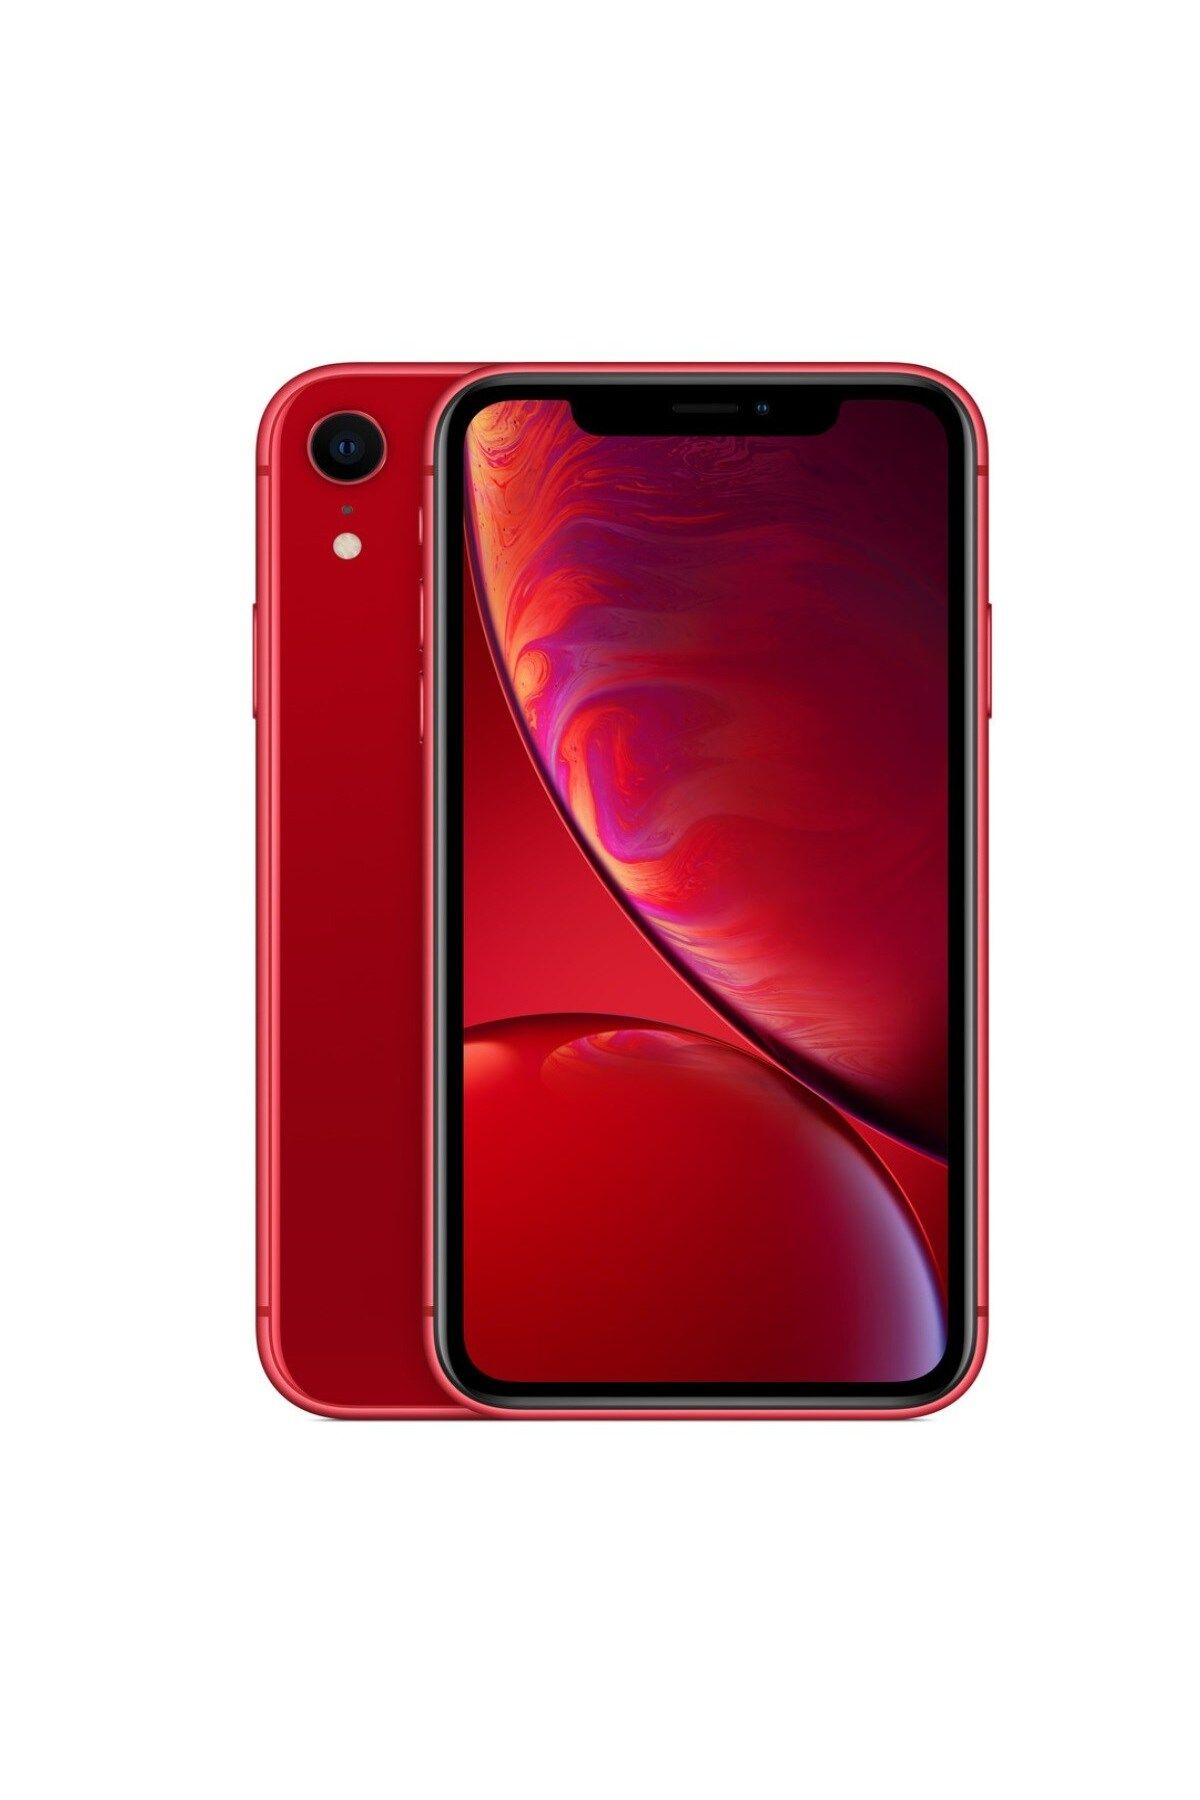 Apple iPhone XR 64GB Kırmızı (Yenilenmiş - İyi)